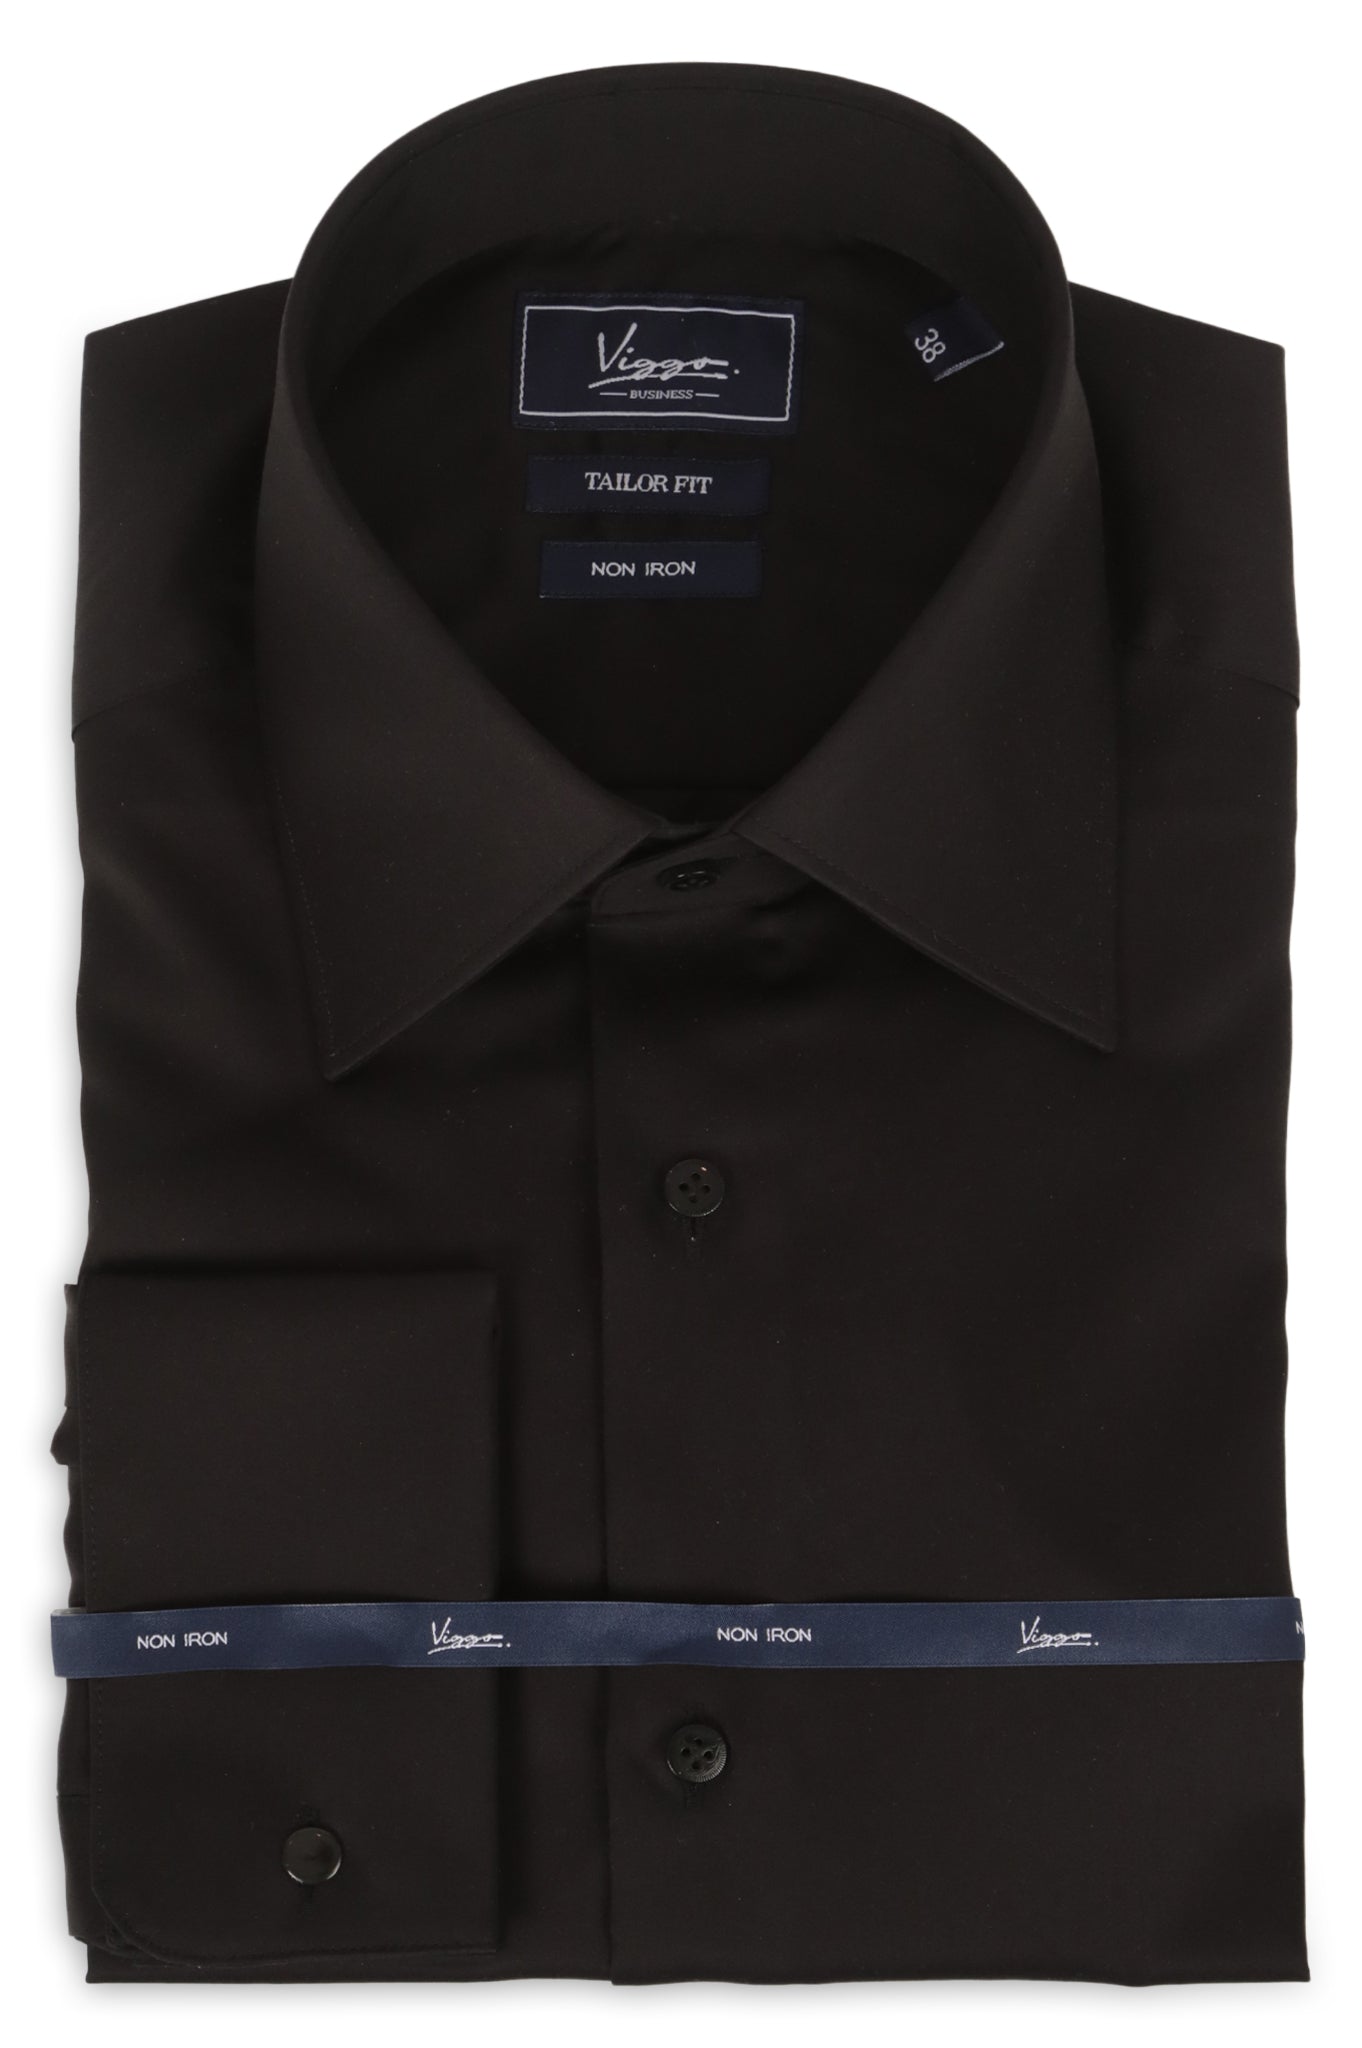 Black non-iron shirt, cufflinks